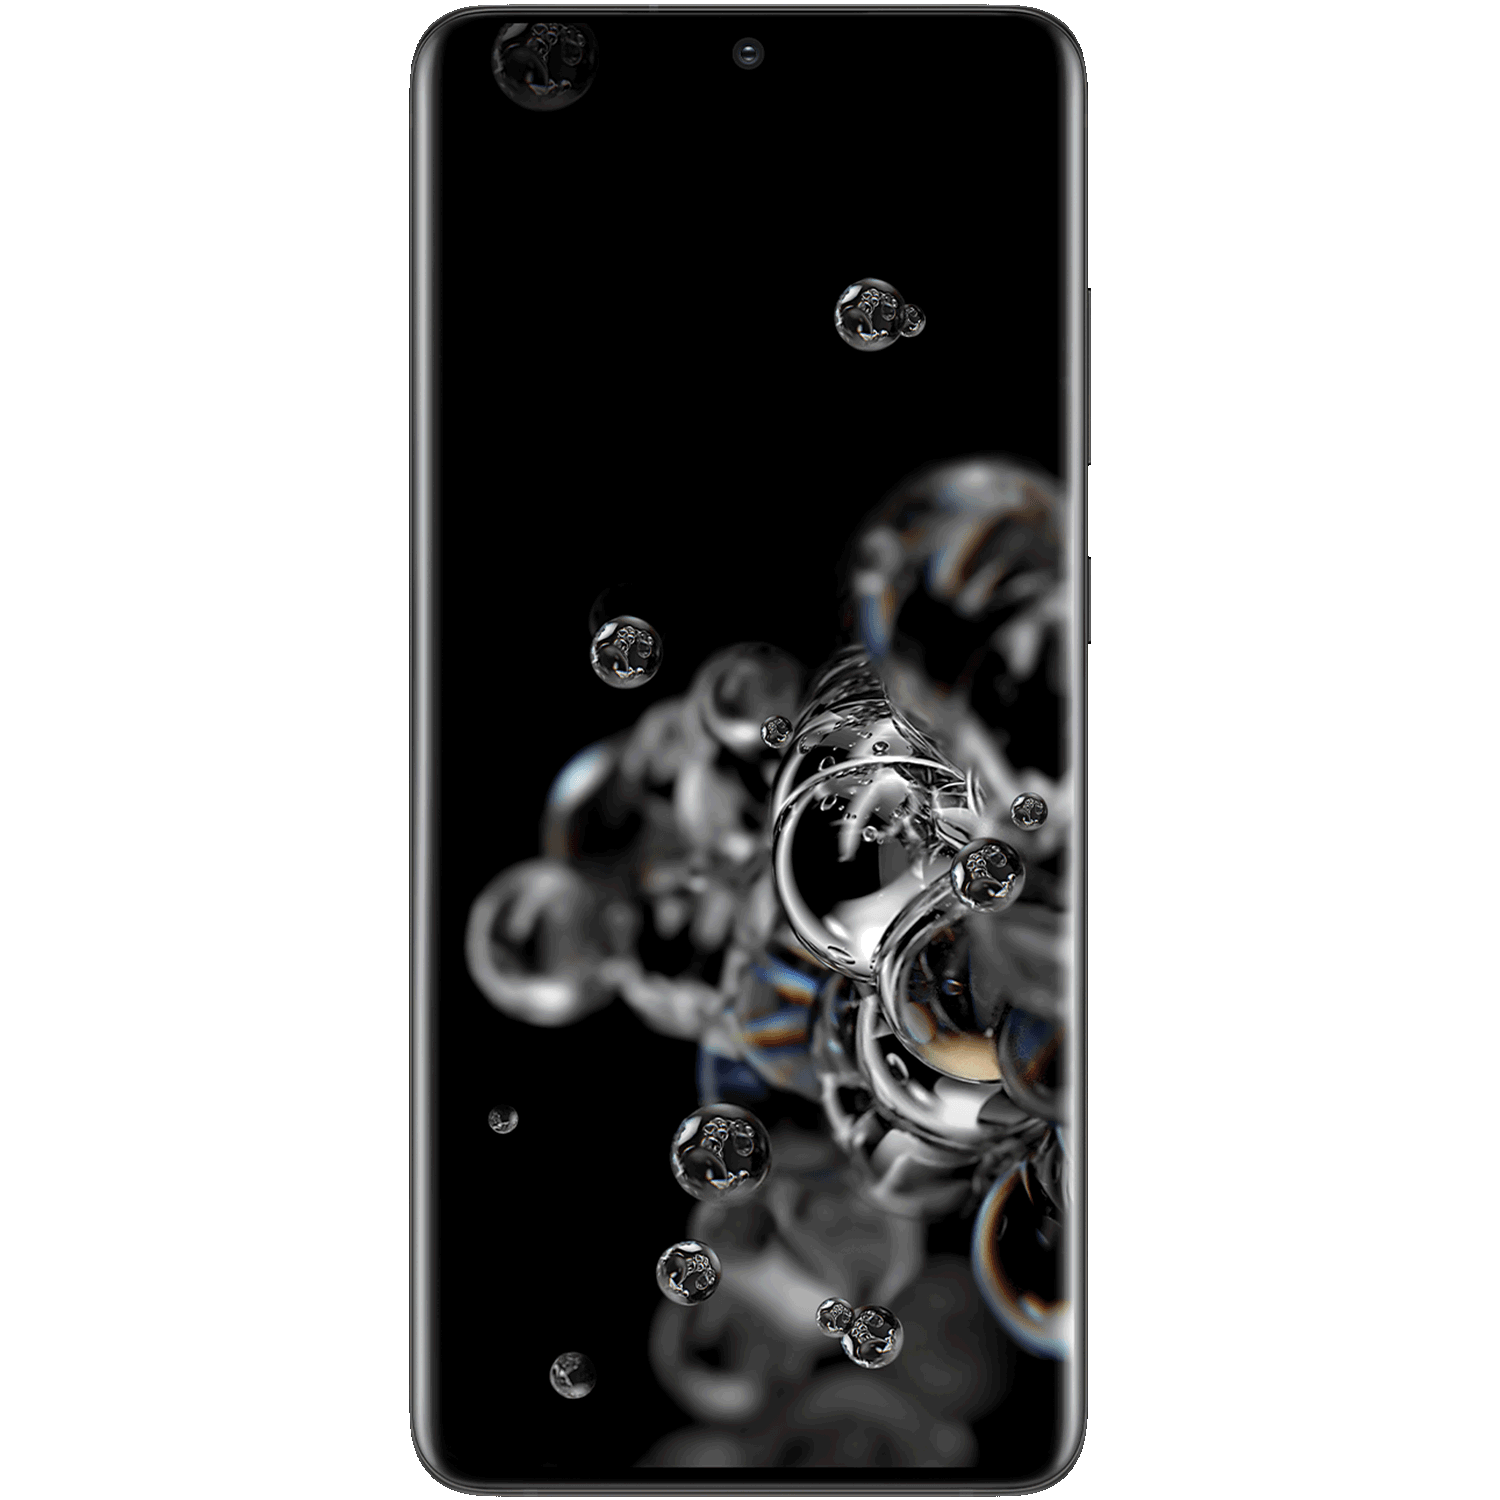 Refurbished (Excellent) - Samsung Galaxy S20 Ultra 5G 128GB Smartphone - Cosmic Black - Unlocked - Certified Refurbished